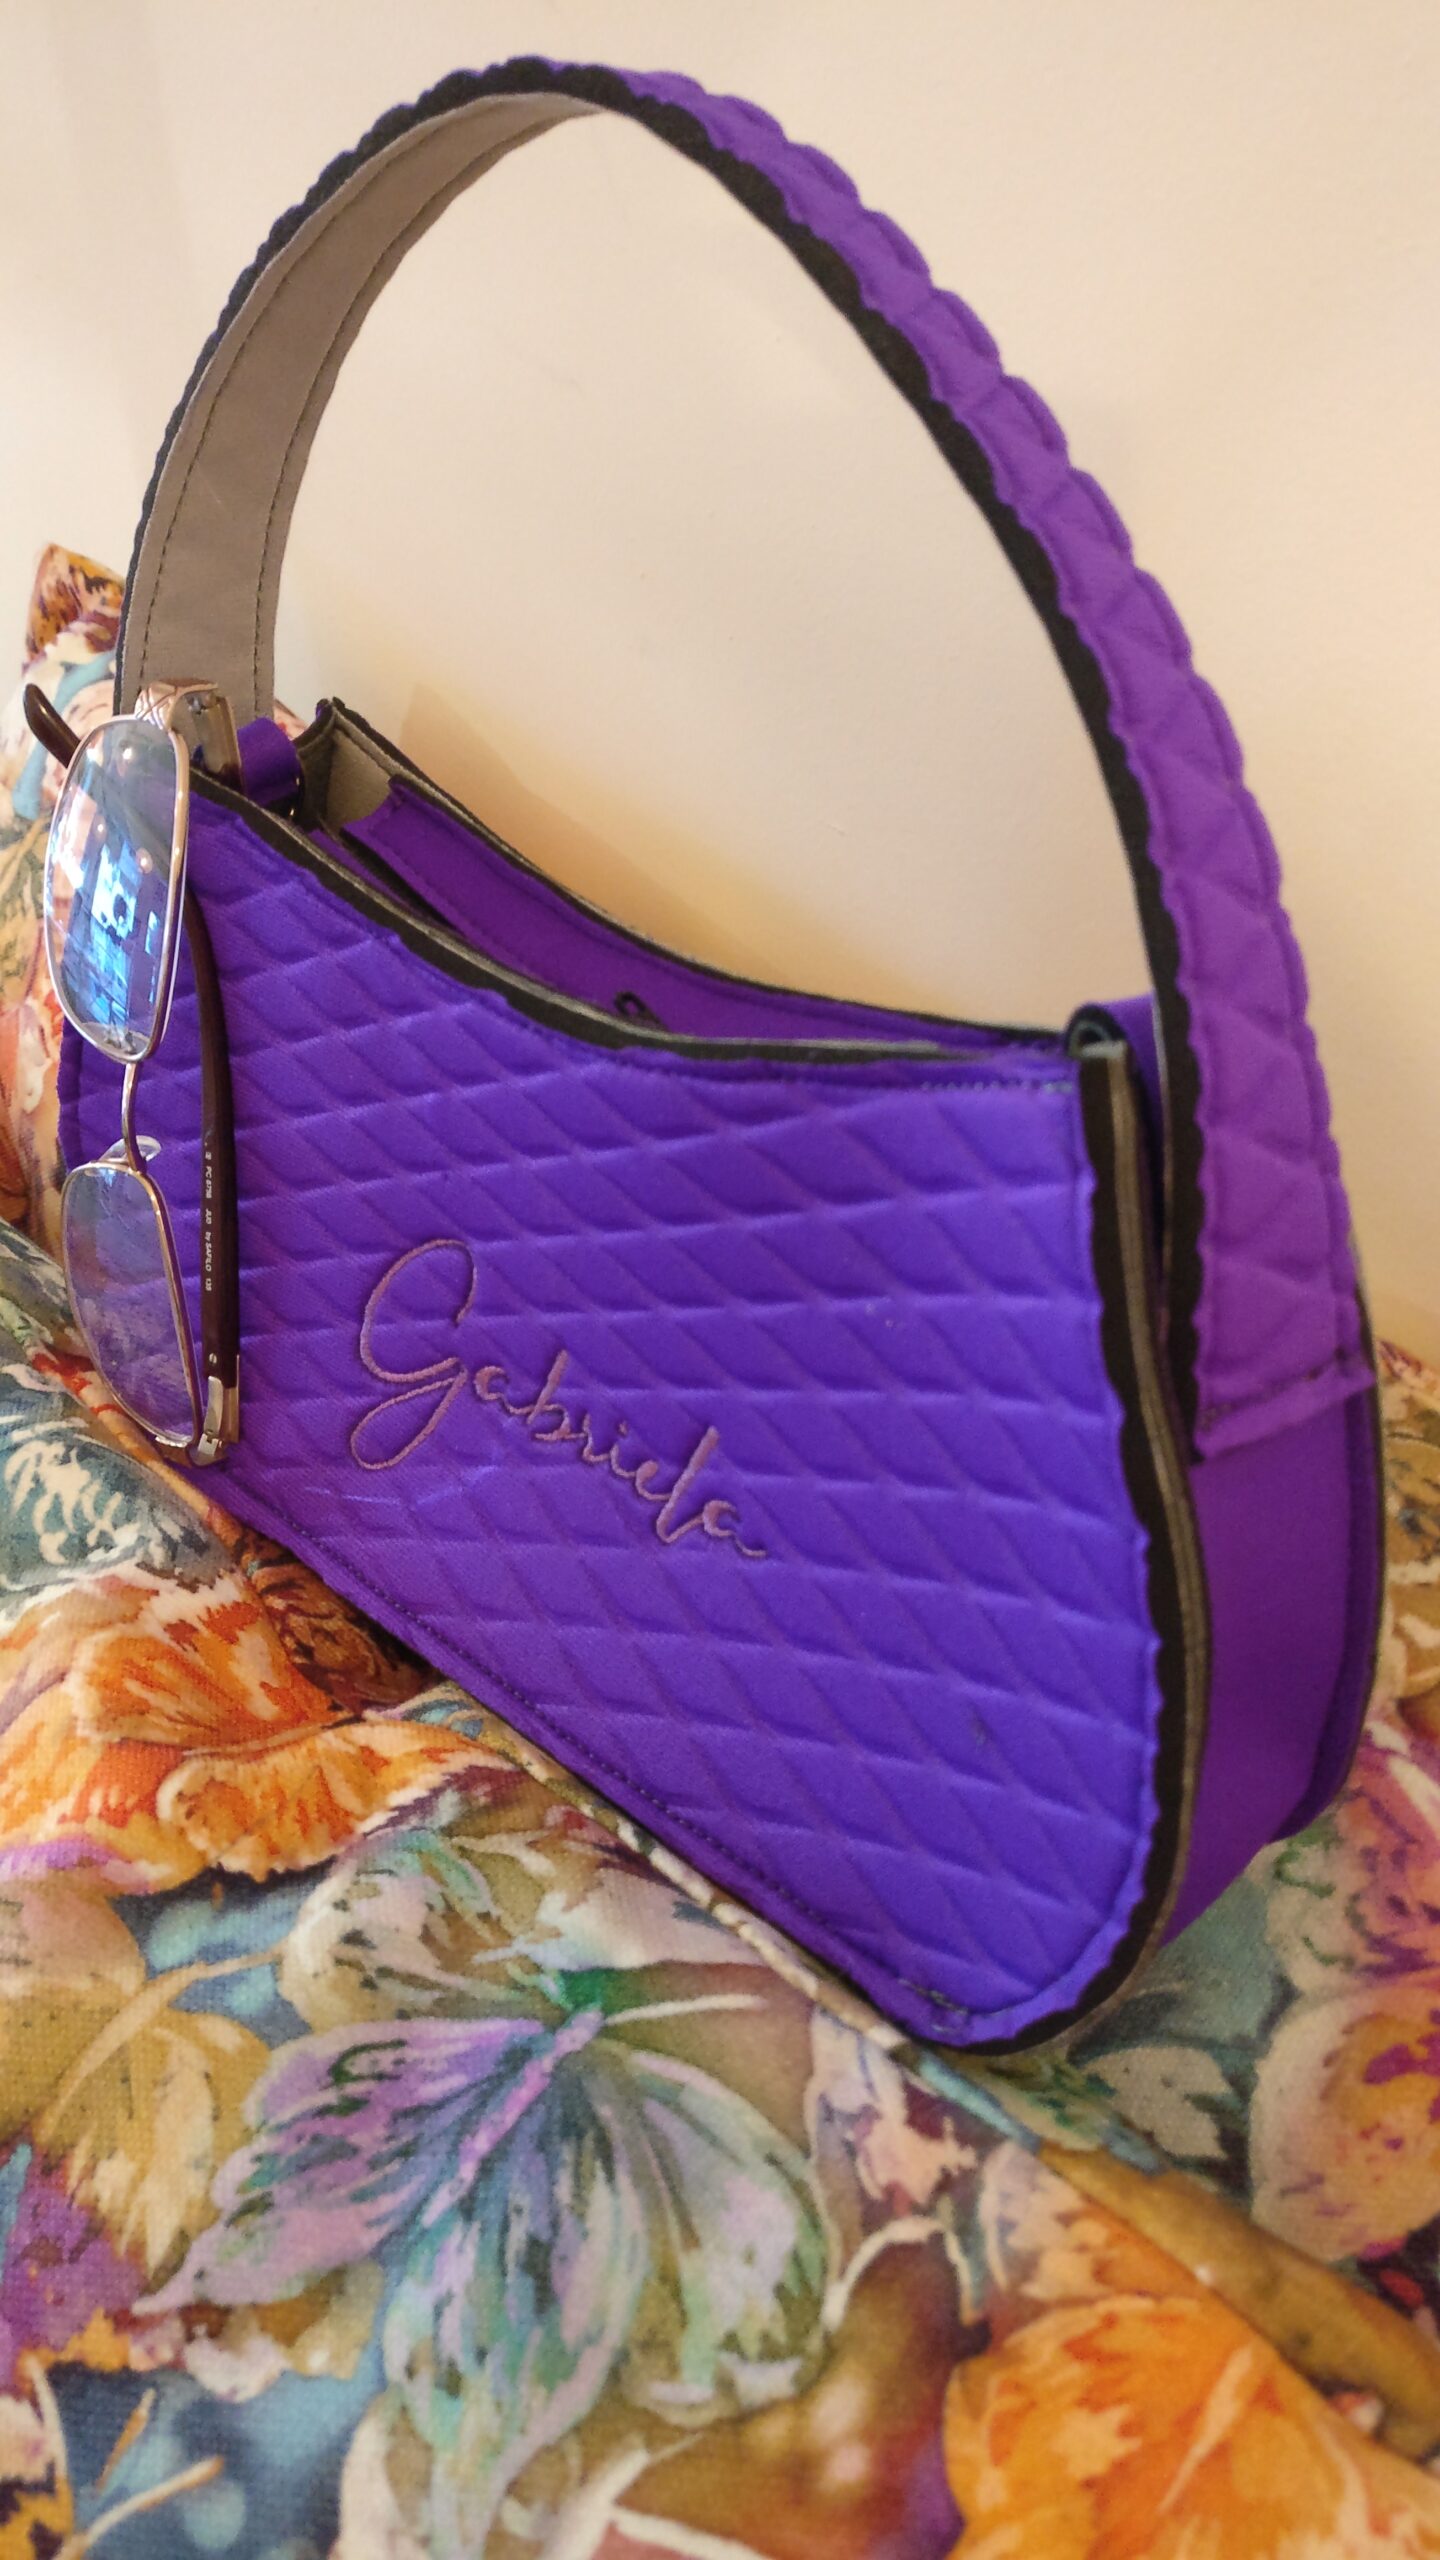 Gabriela - Embossed Violet Neoprene Handbag with Crossbody Strap